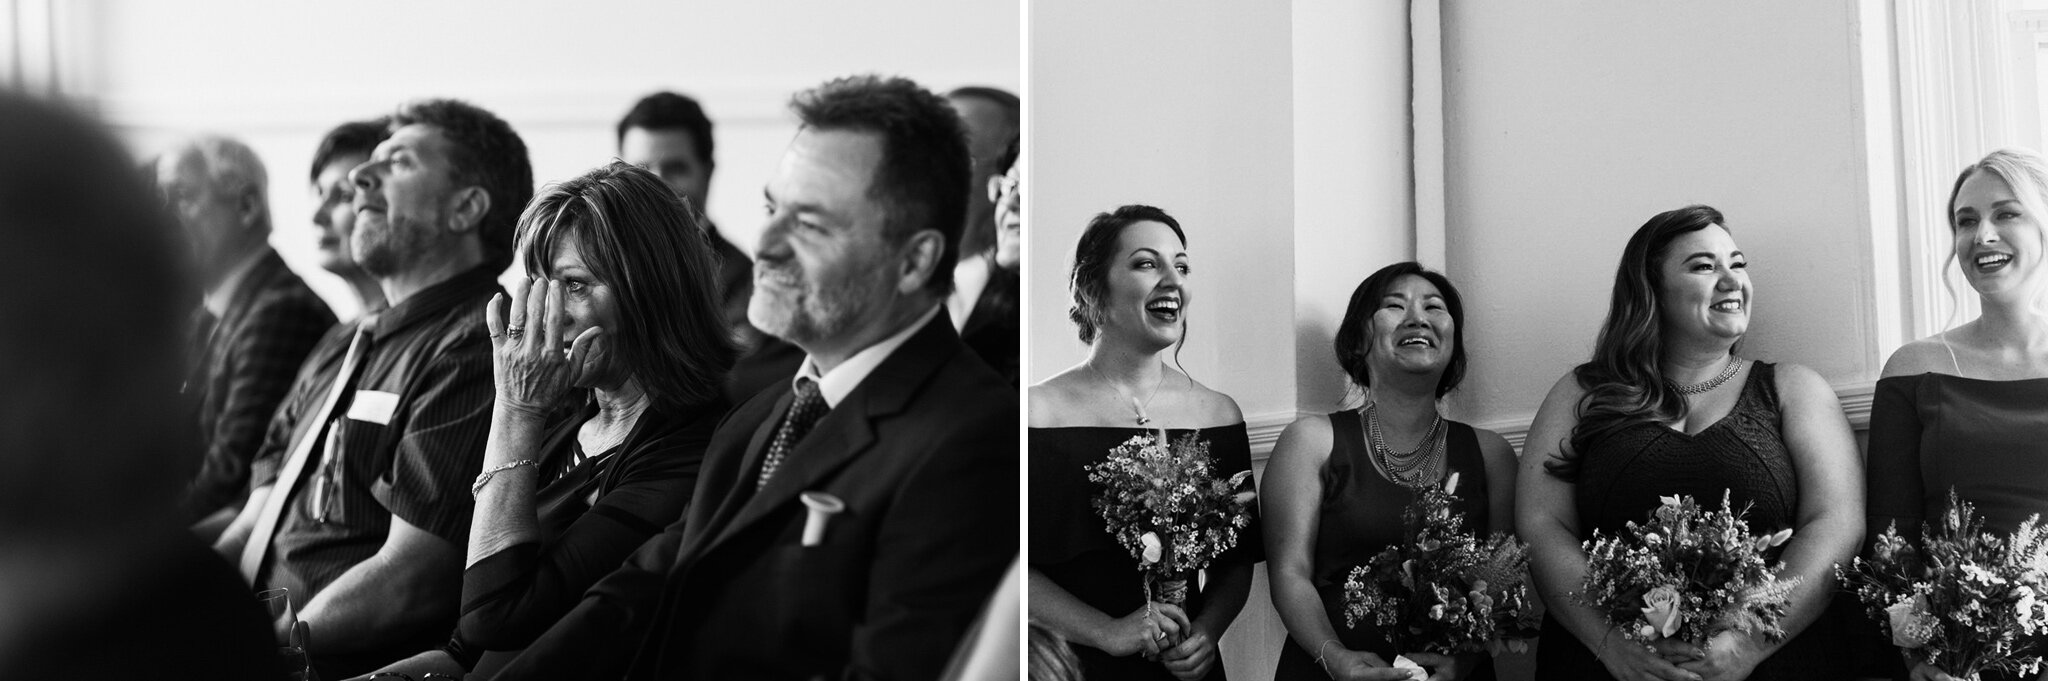 486-emotional-wedding-guests-toronto-great-hall-bar-isabel-black-white.jpg